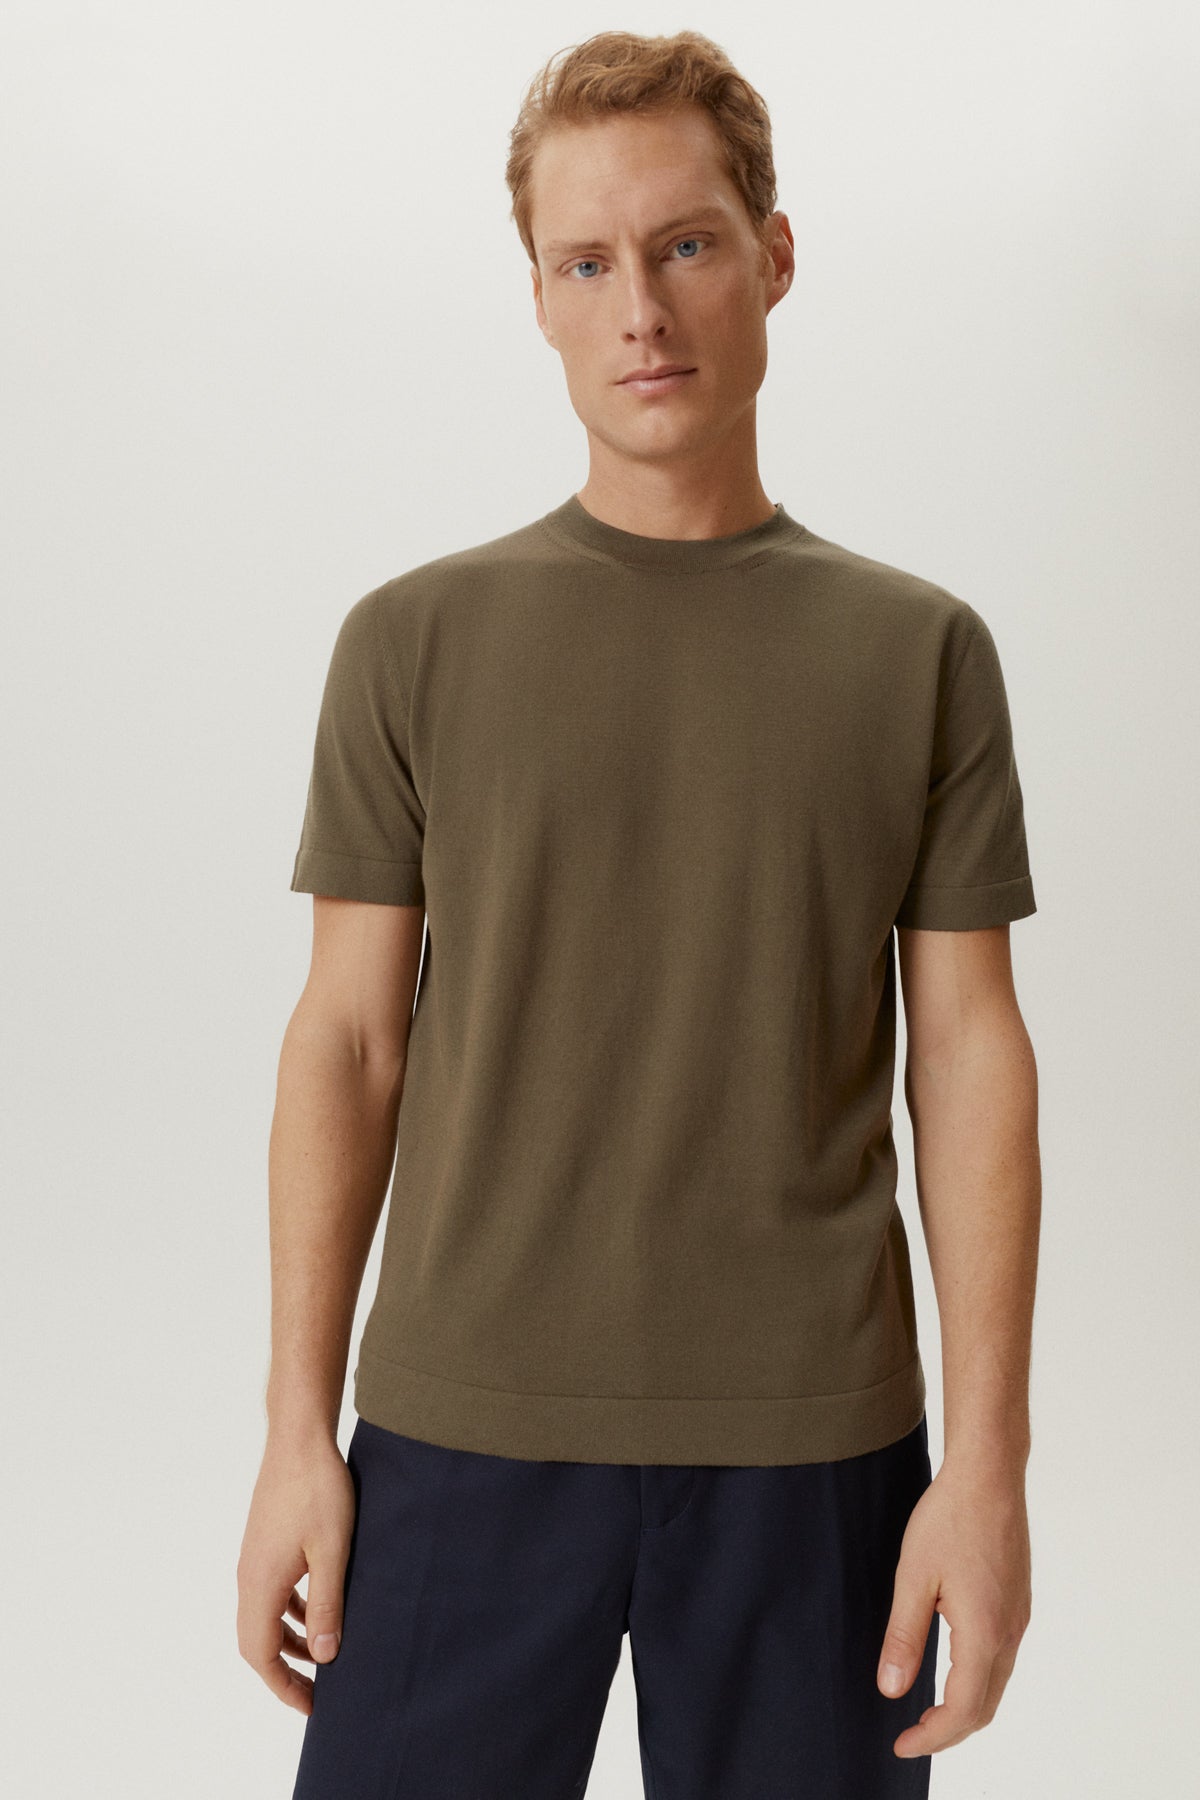 Kaki Green | The Organic Cotton Knit T-Shirt